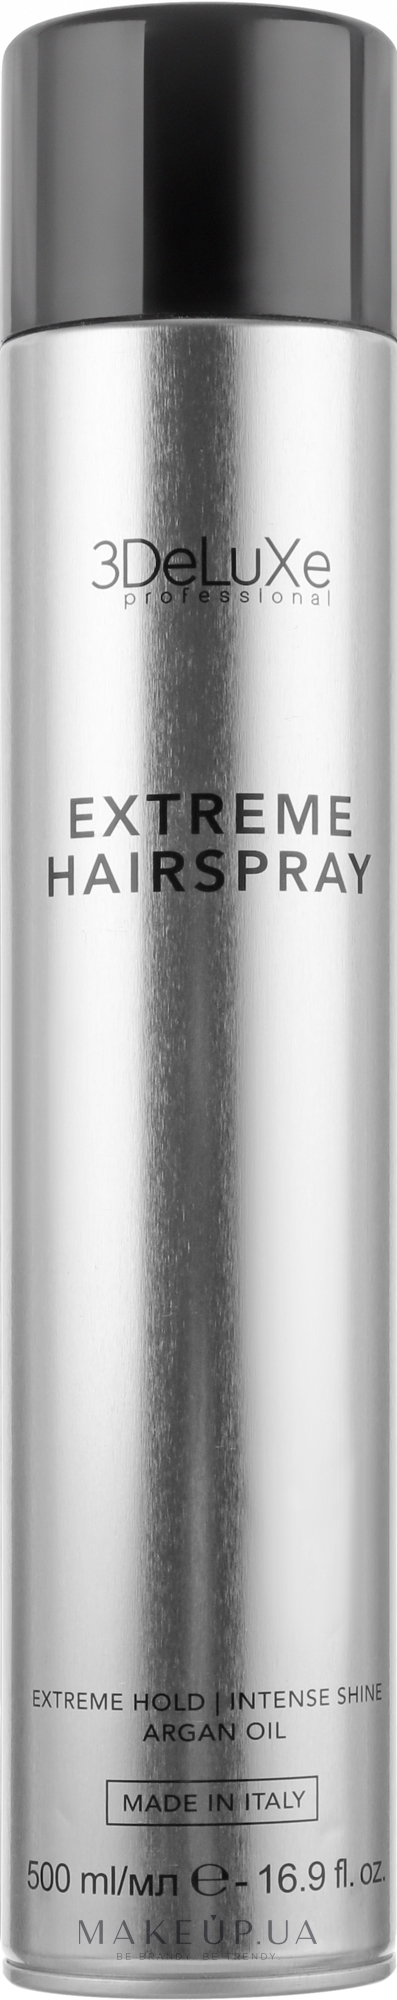 Лак экстрасильной фиксации - 3DeLuXe Extreme Hairspray — фото 500ml